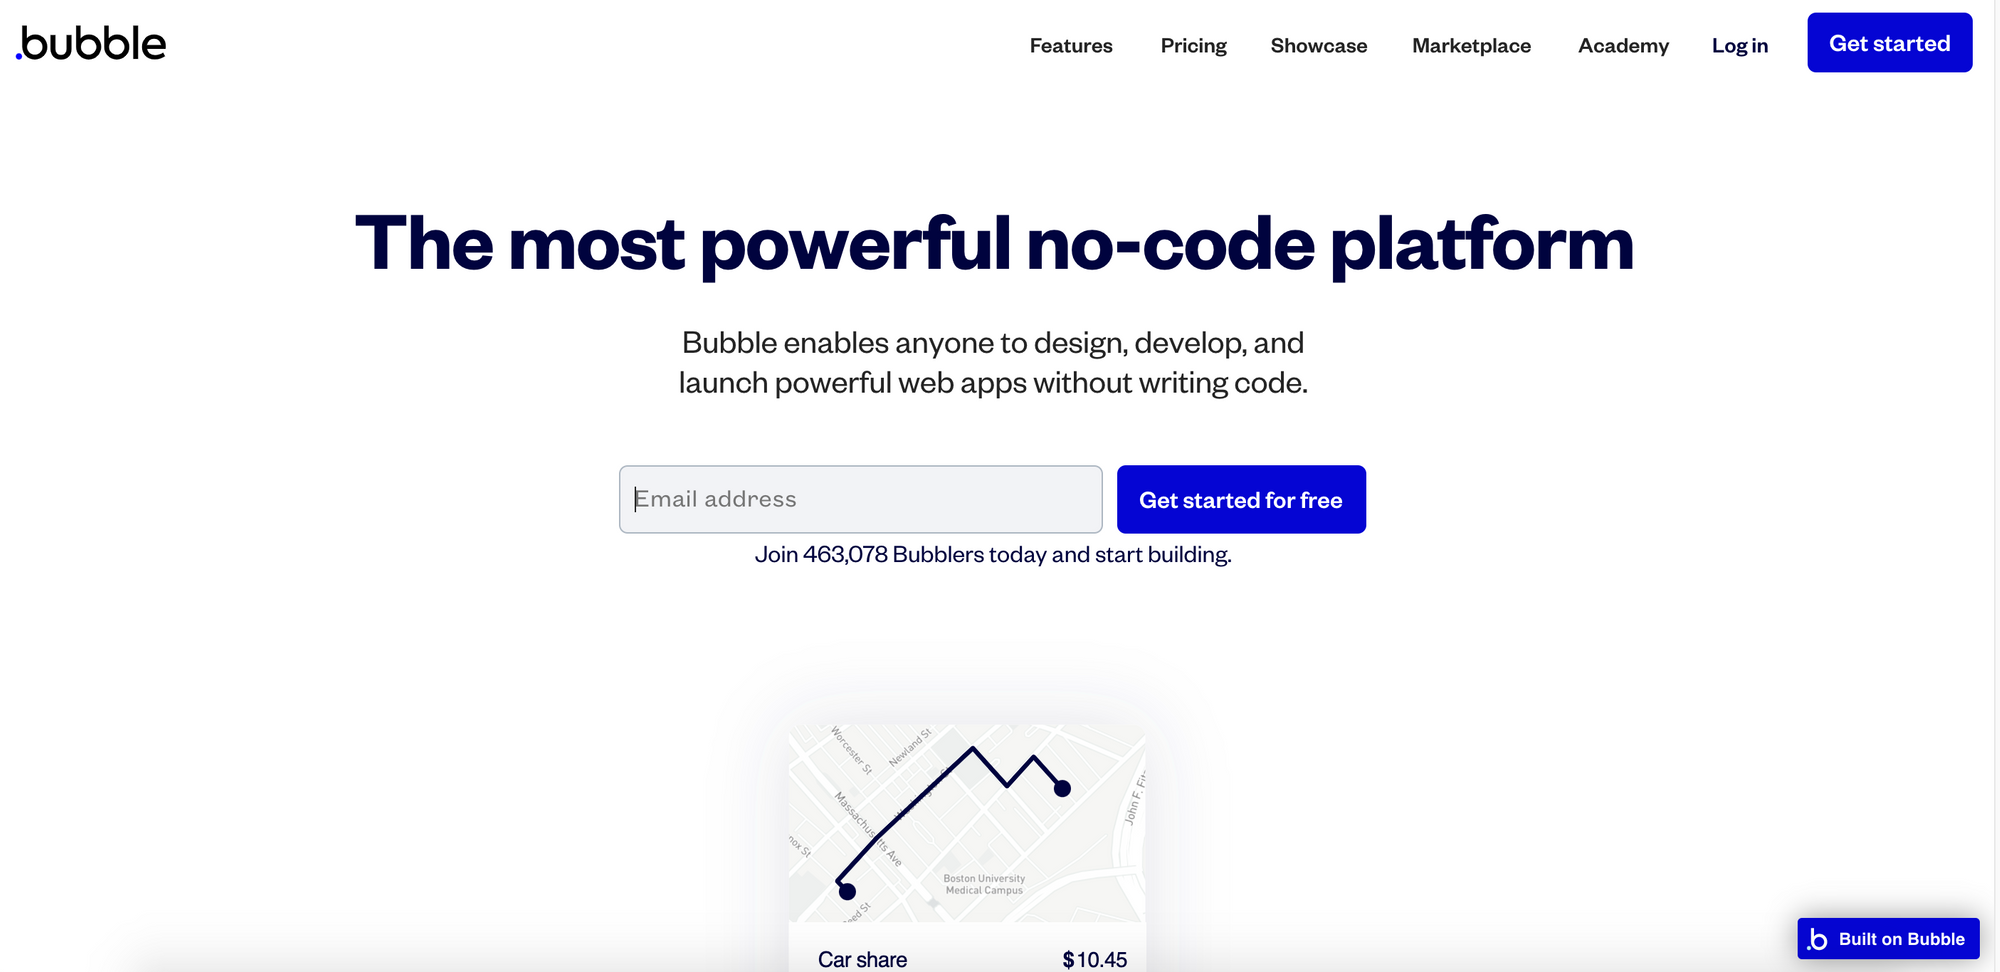 Bubble: the most powerful no-code platform for web app development